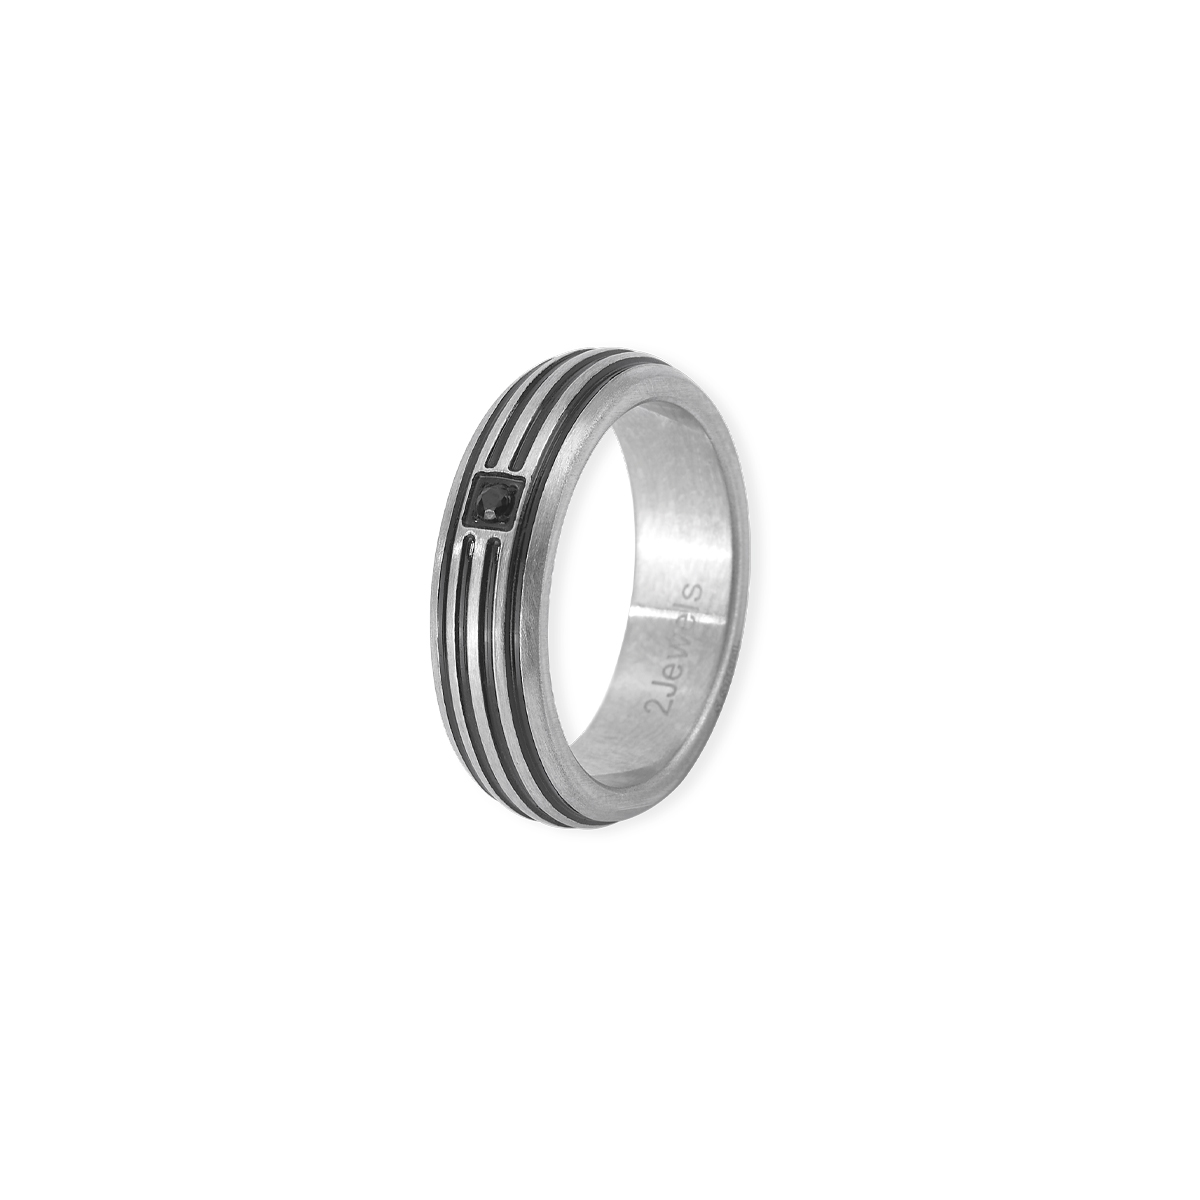 Anello 2Jewels Uomo Man's Ring misura 25 21076-25